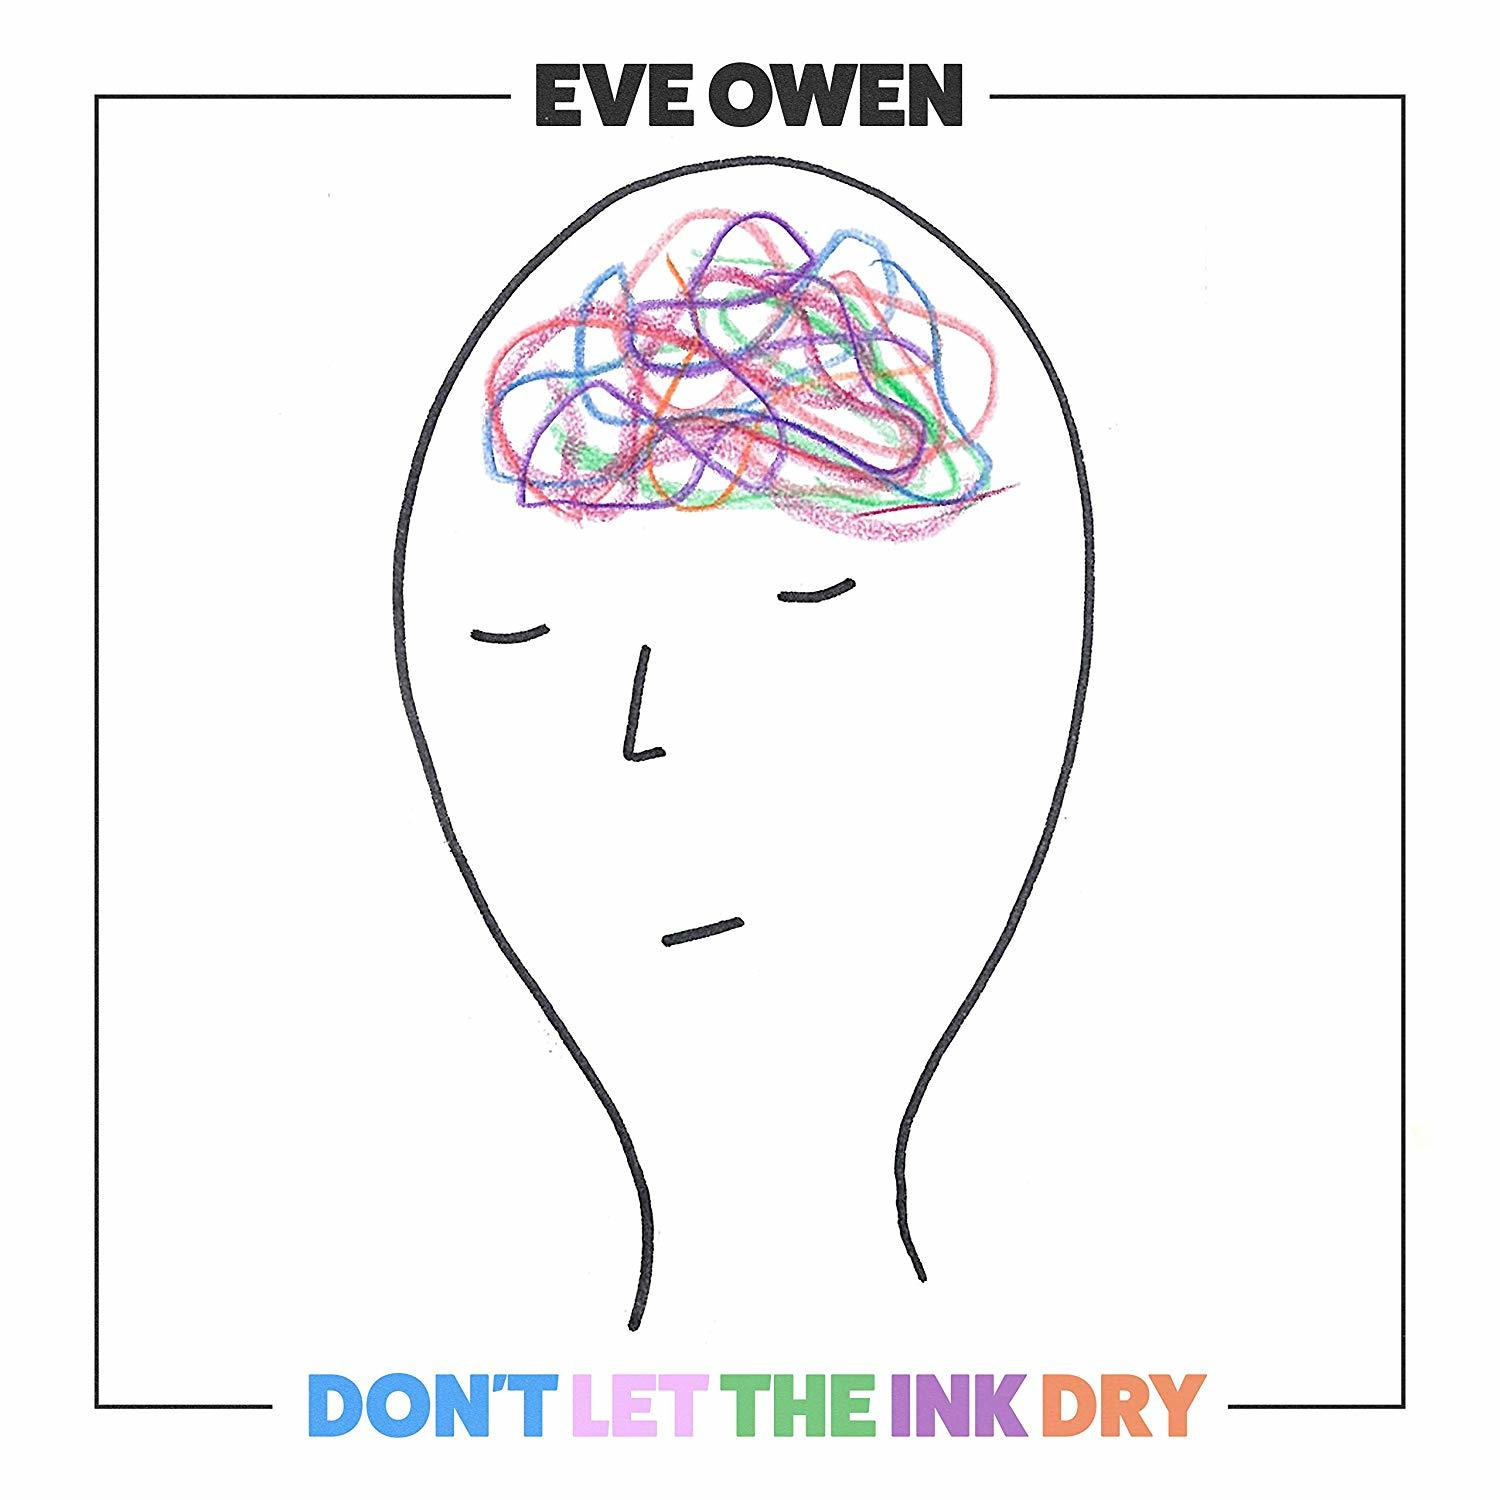 Eve Owen - DON T - DRY (Vinyl) INK THE LET